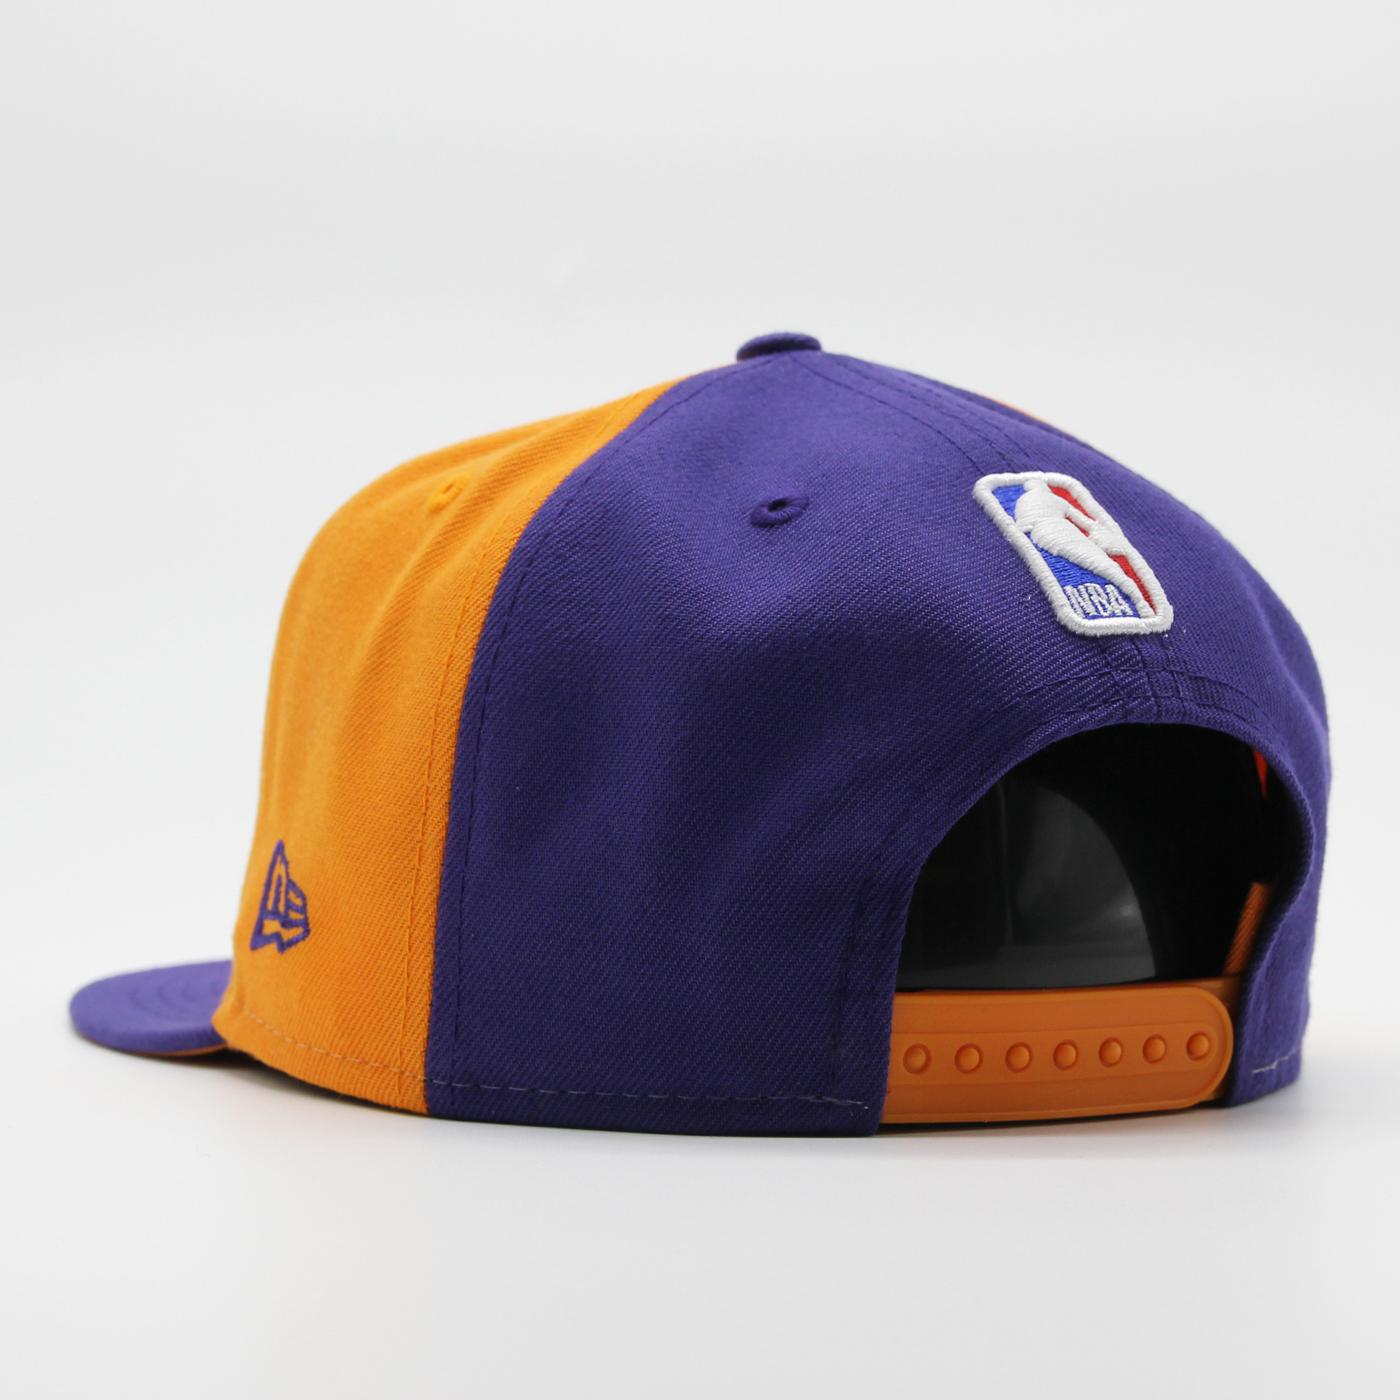 New Era NBA Authentics Back Half Edition 9Fifty P Suns purple/orange/wht - Shop-Tetuan